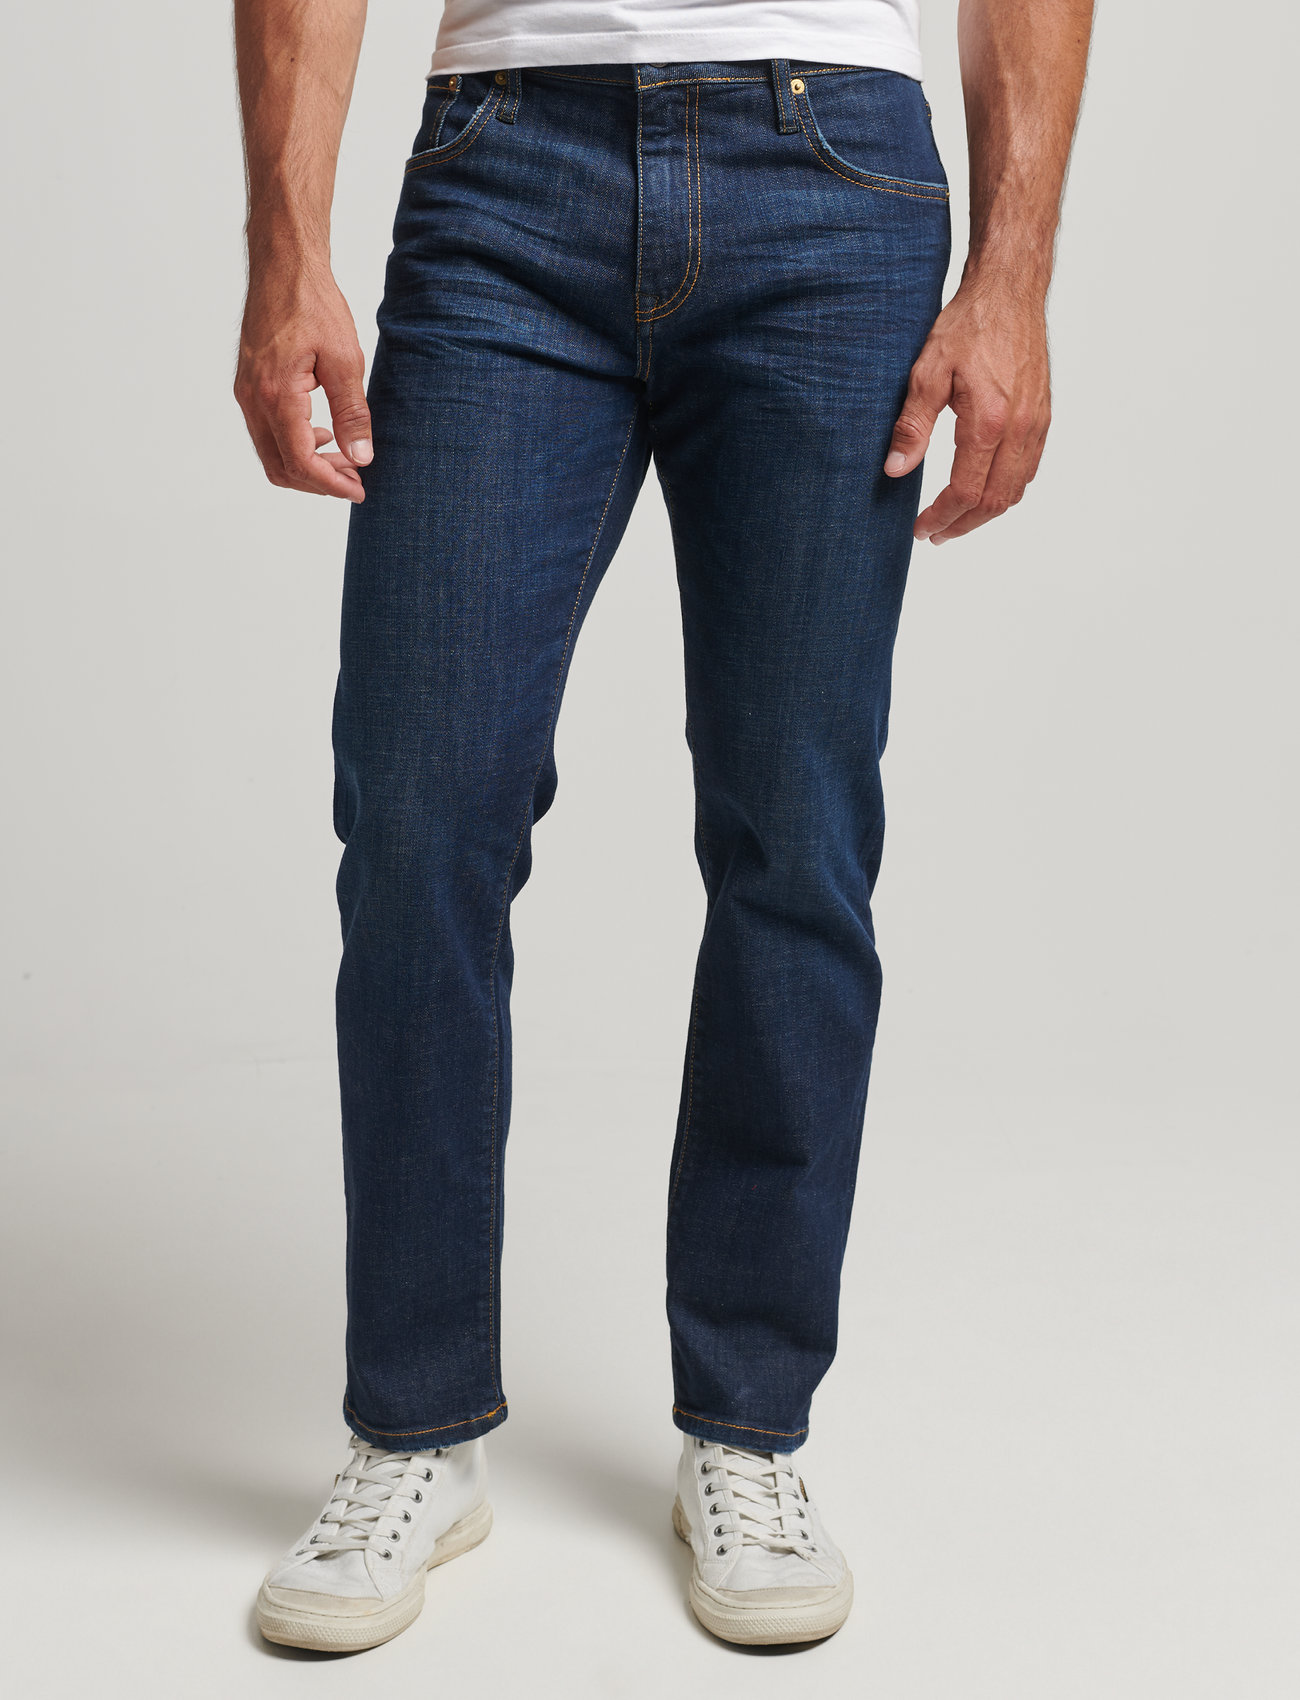 Vintage Slim Straight Jean - jeans - Boozt.com